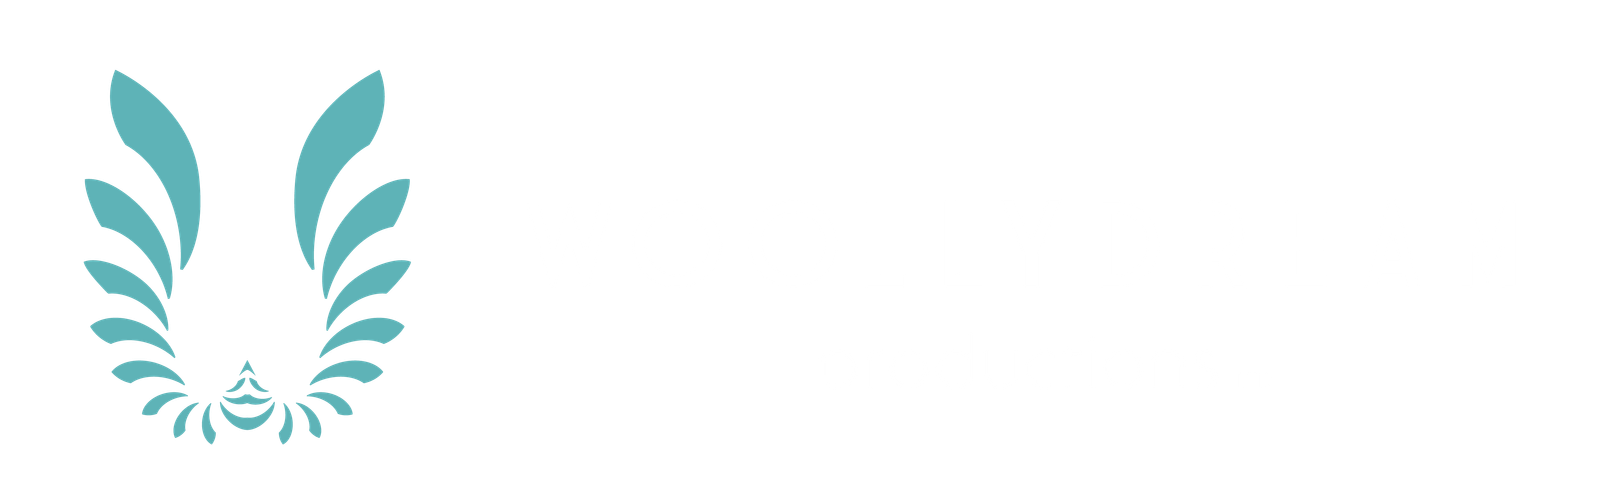 Woolly Dream